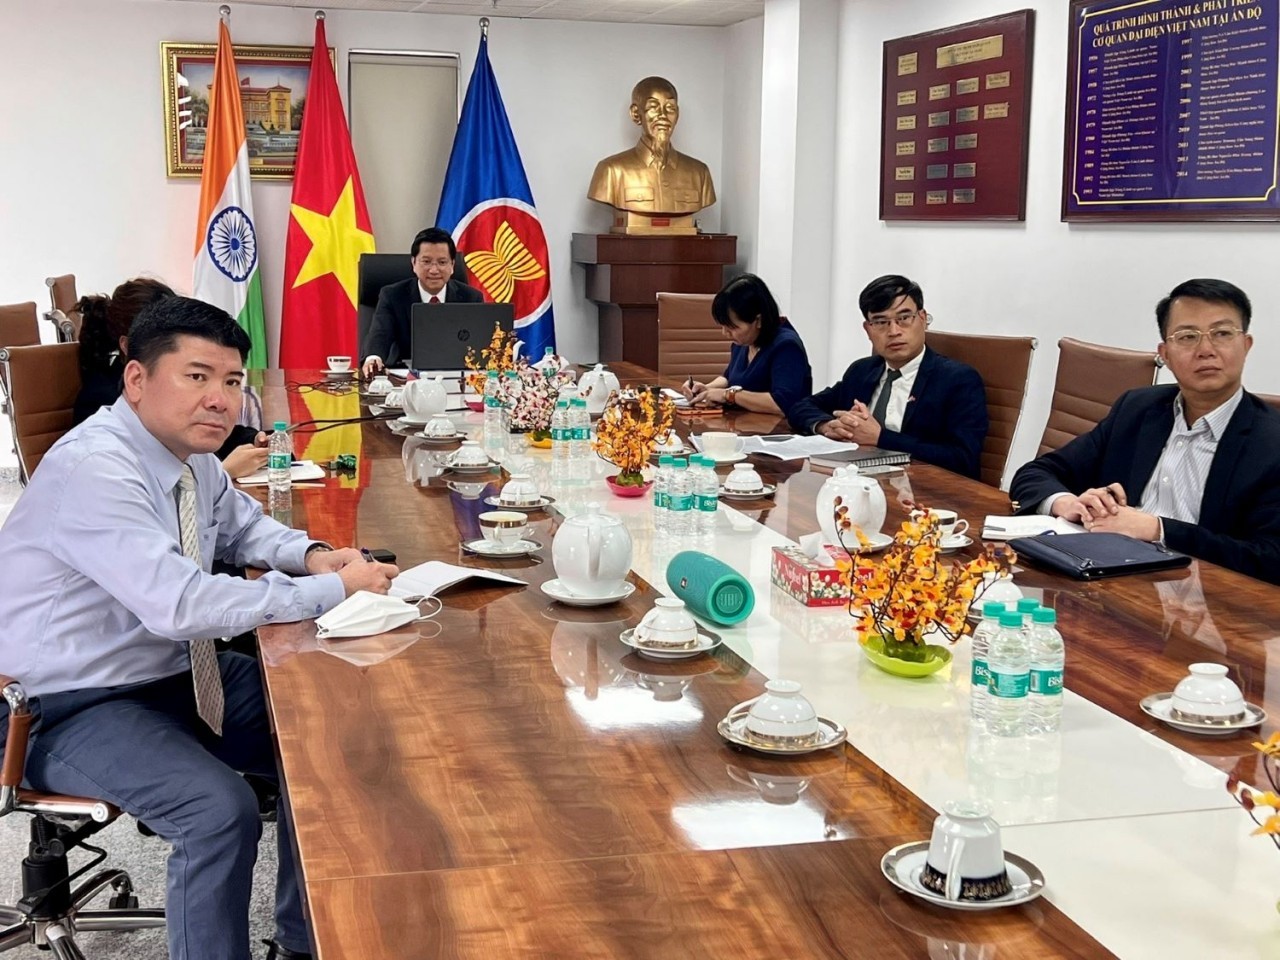 India-Based Vietnam Embassy Meets Overseas Vietnamese